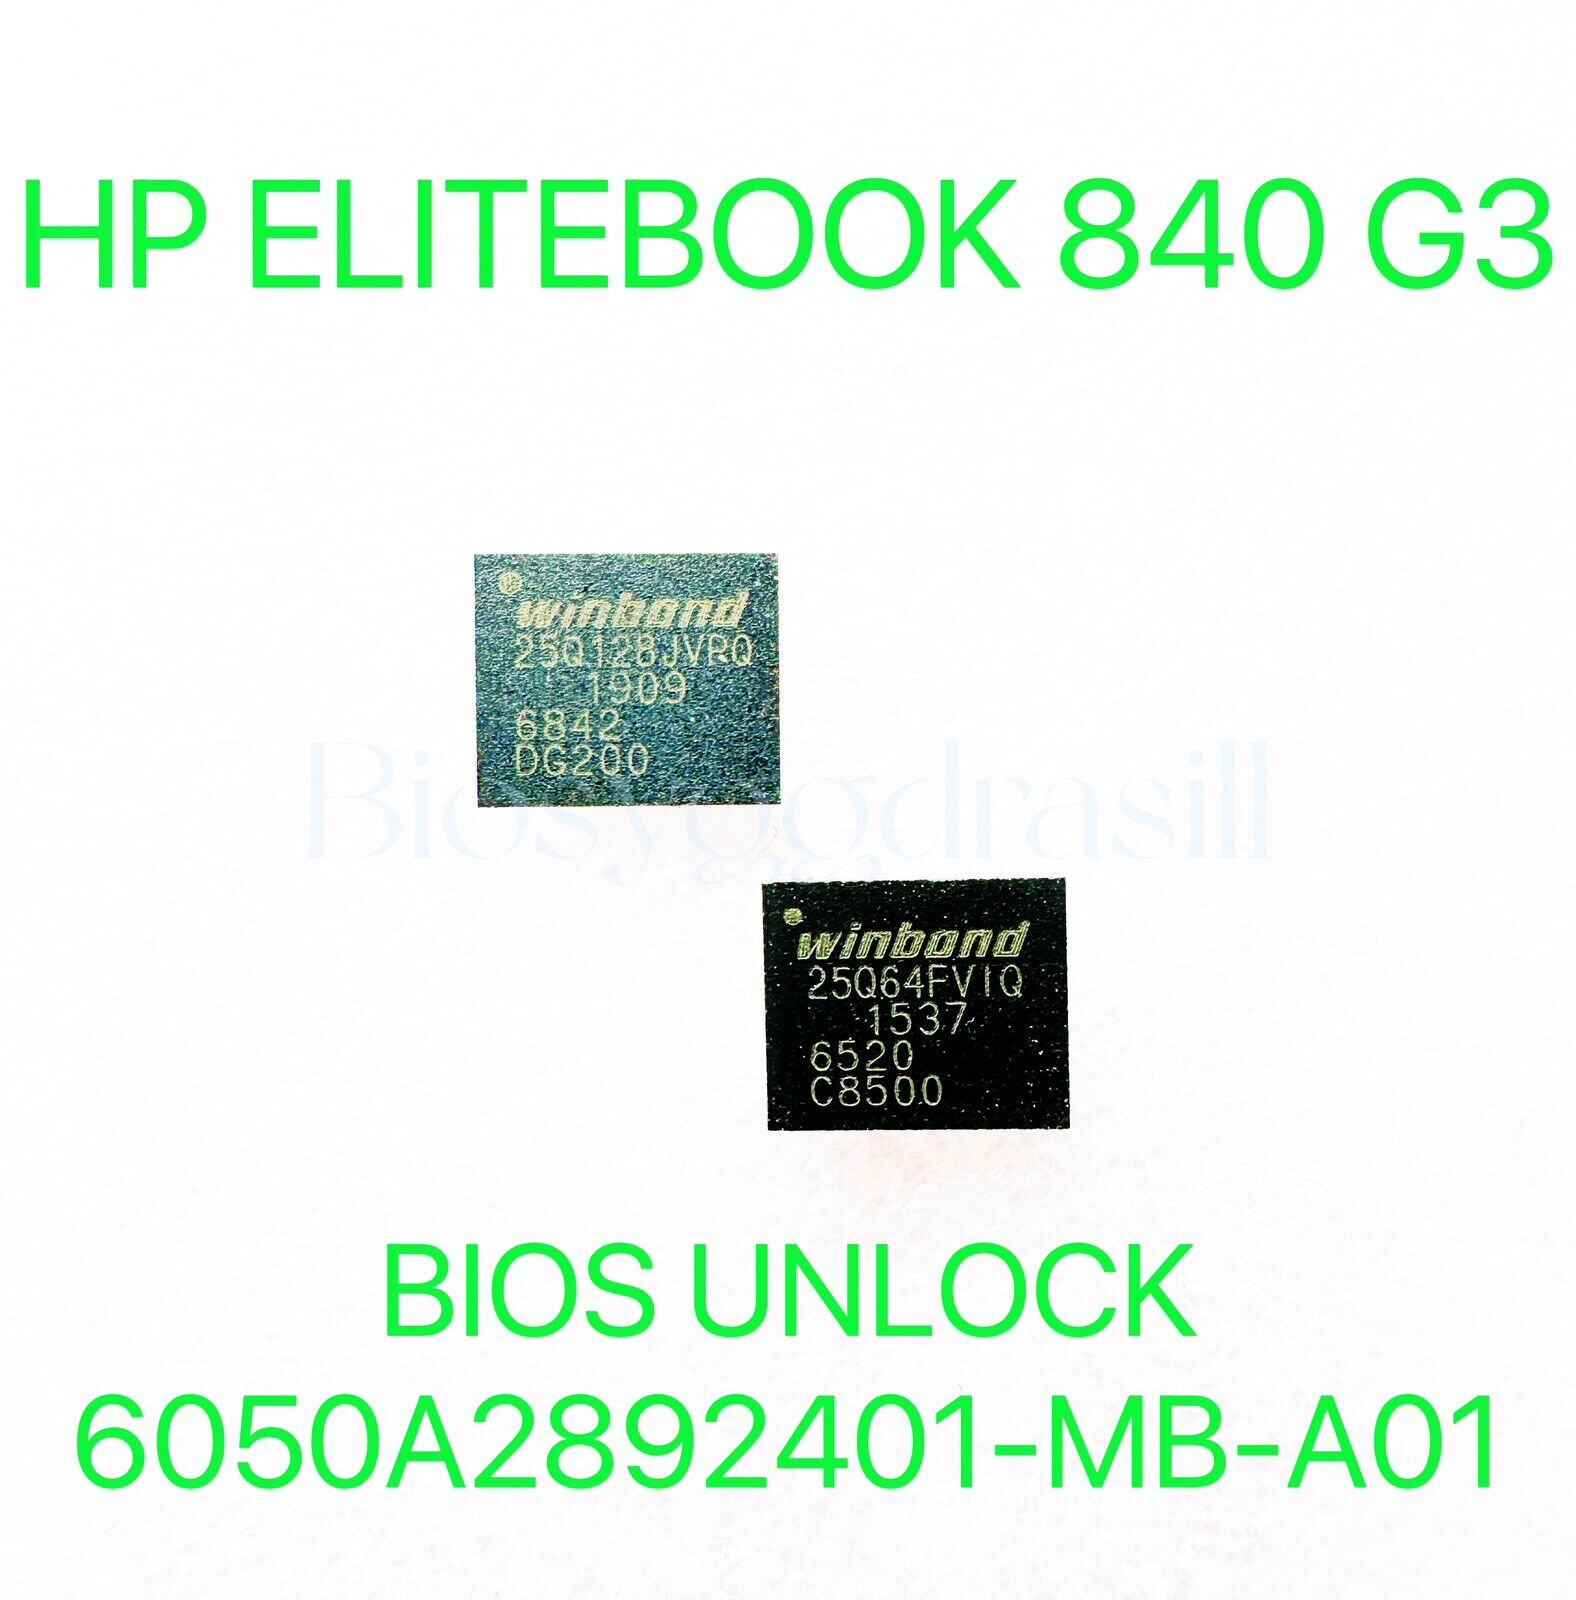 HP ELITEBOOK 840 G3 MAIN&EC BIOS CHIP PASSWORD UNLOCK CHIP 6050A2892401-MB-A01